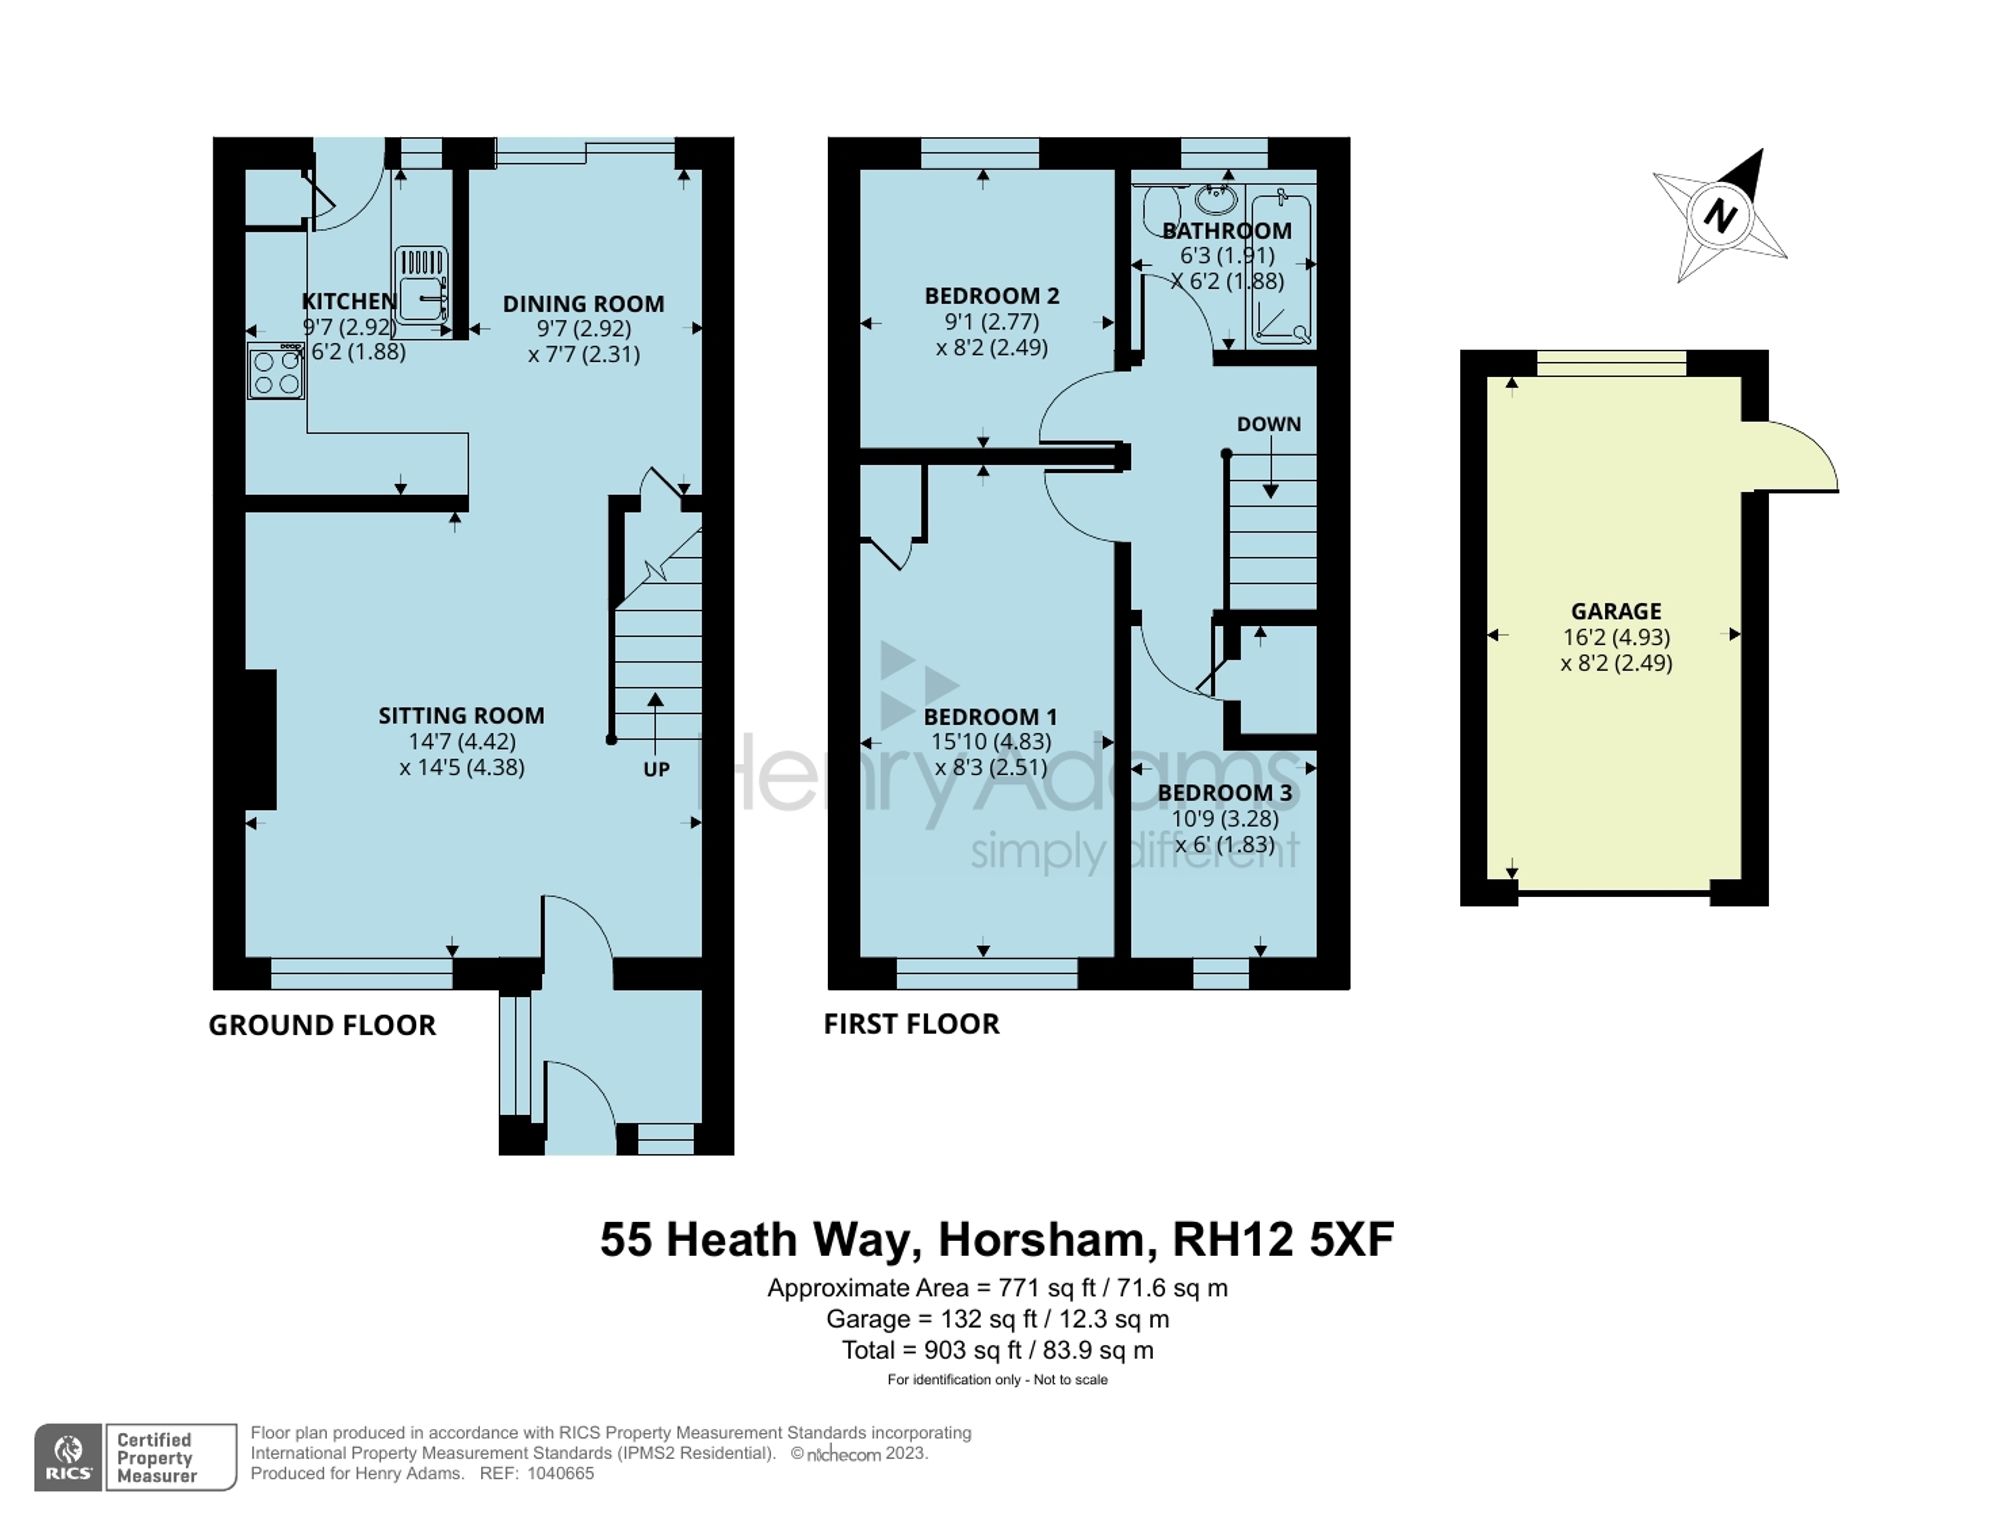 Heath Way, Horsham, RH12 floorplans